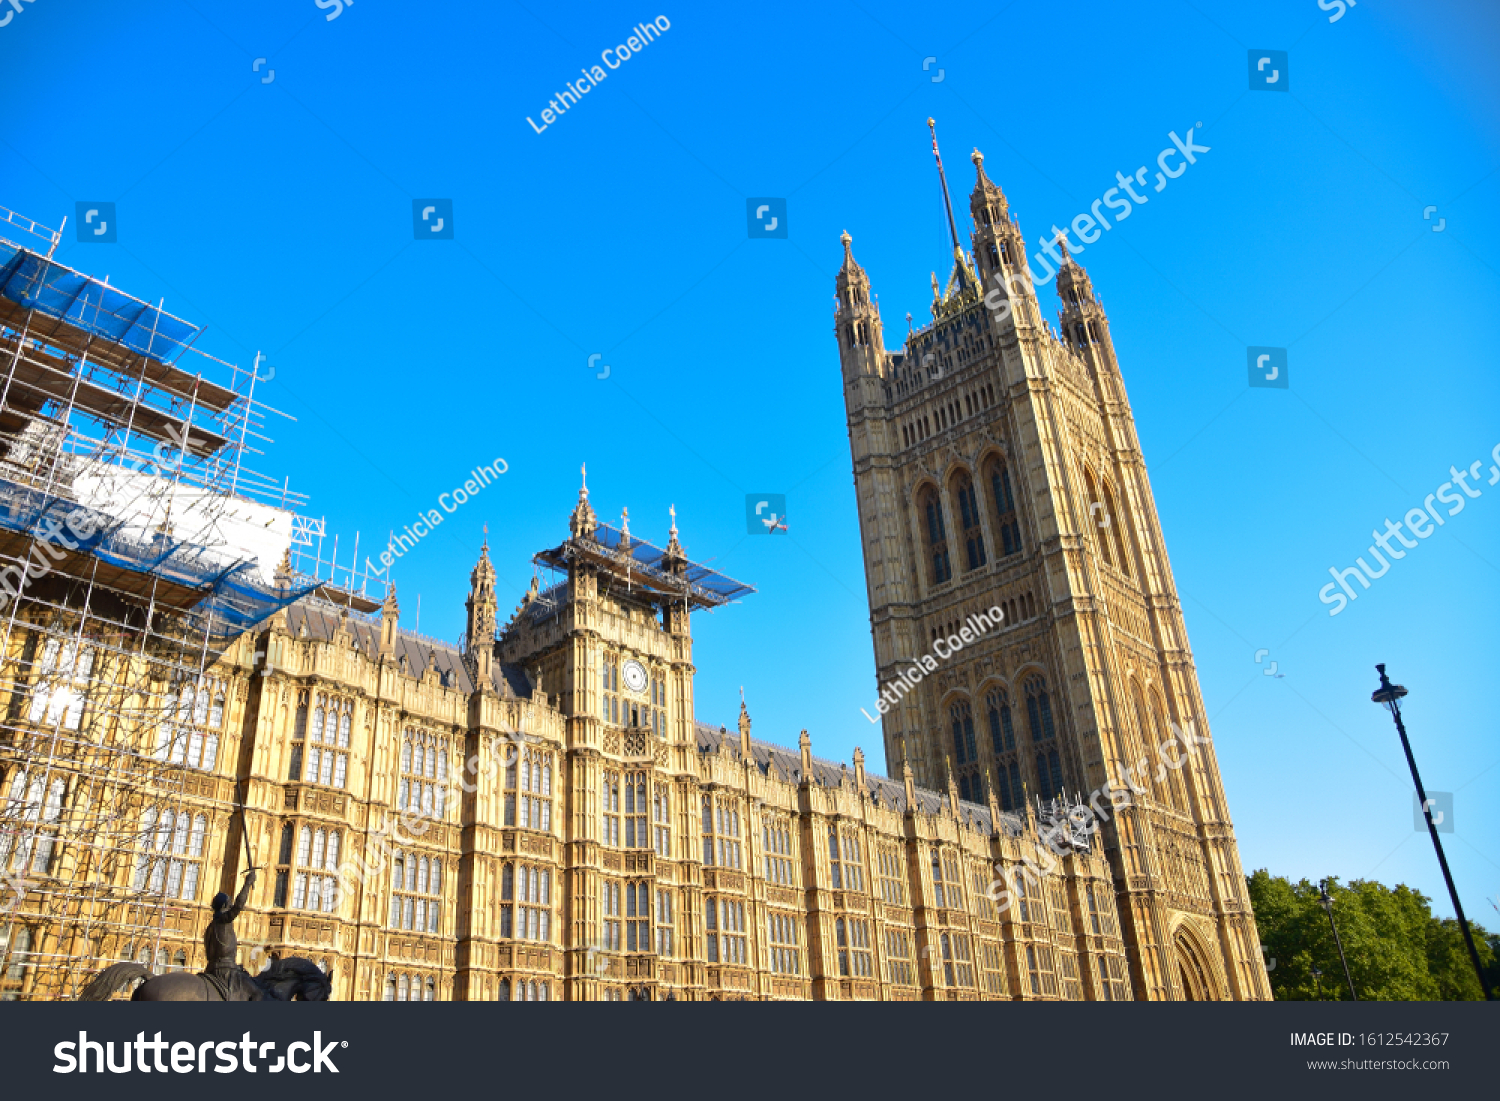 10 Palácio De Westminster Images Stock Photos And Vectors Shutterstock